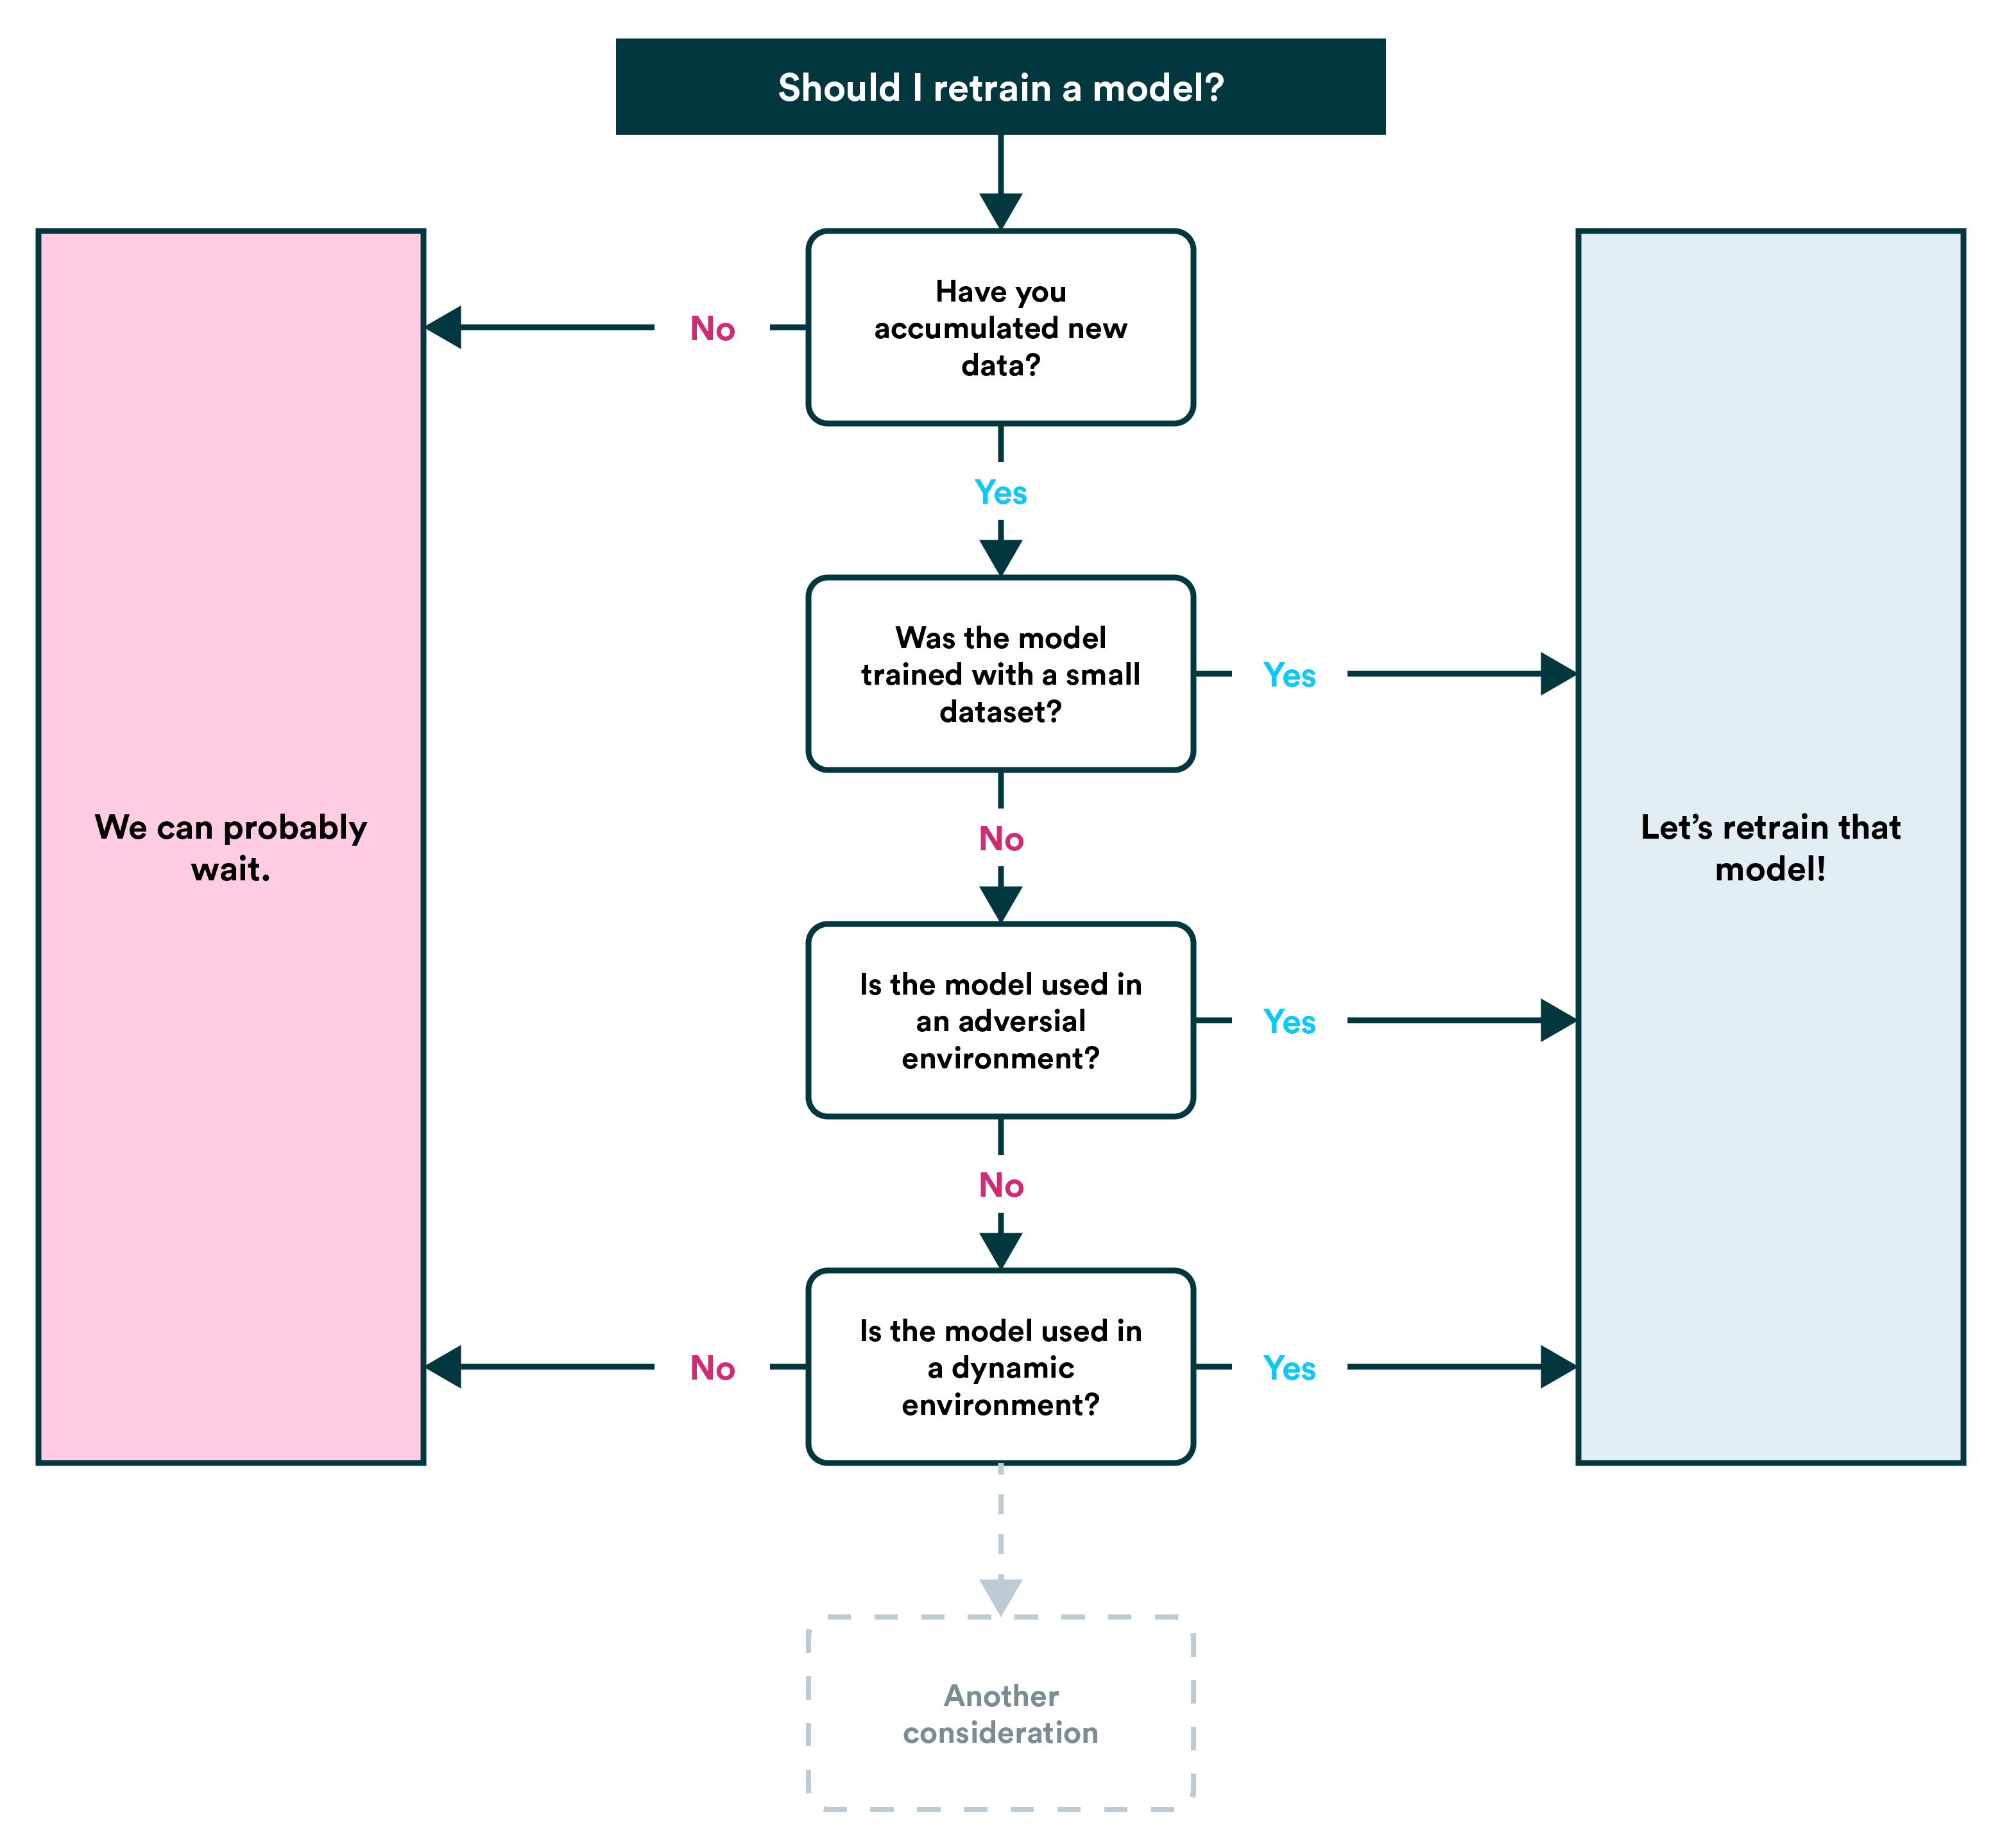 Model Retraining Decision Tree